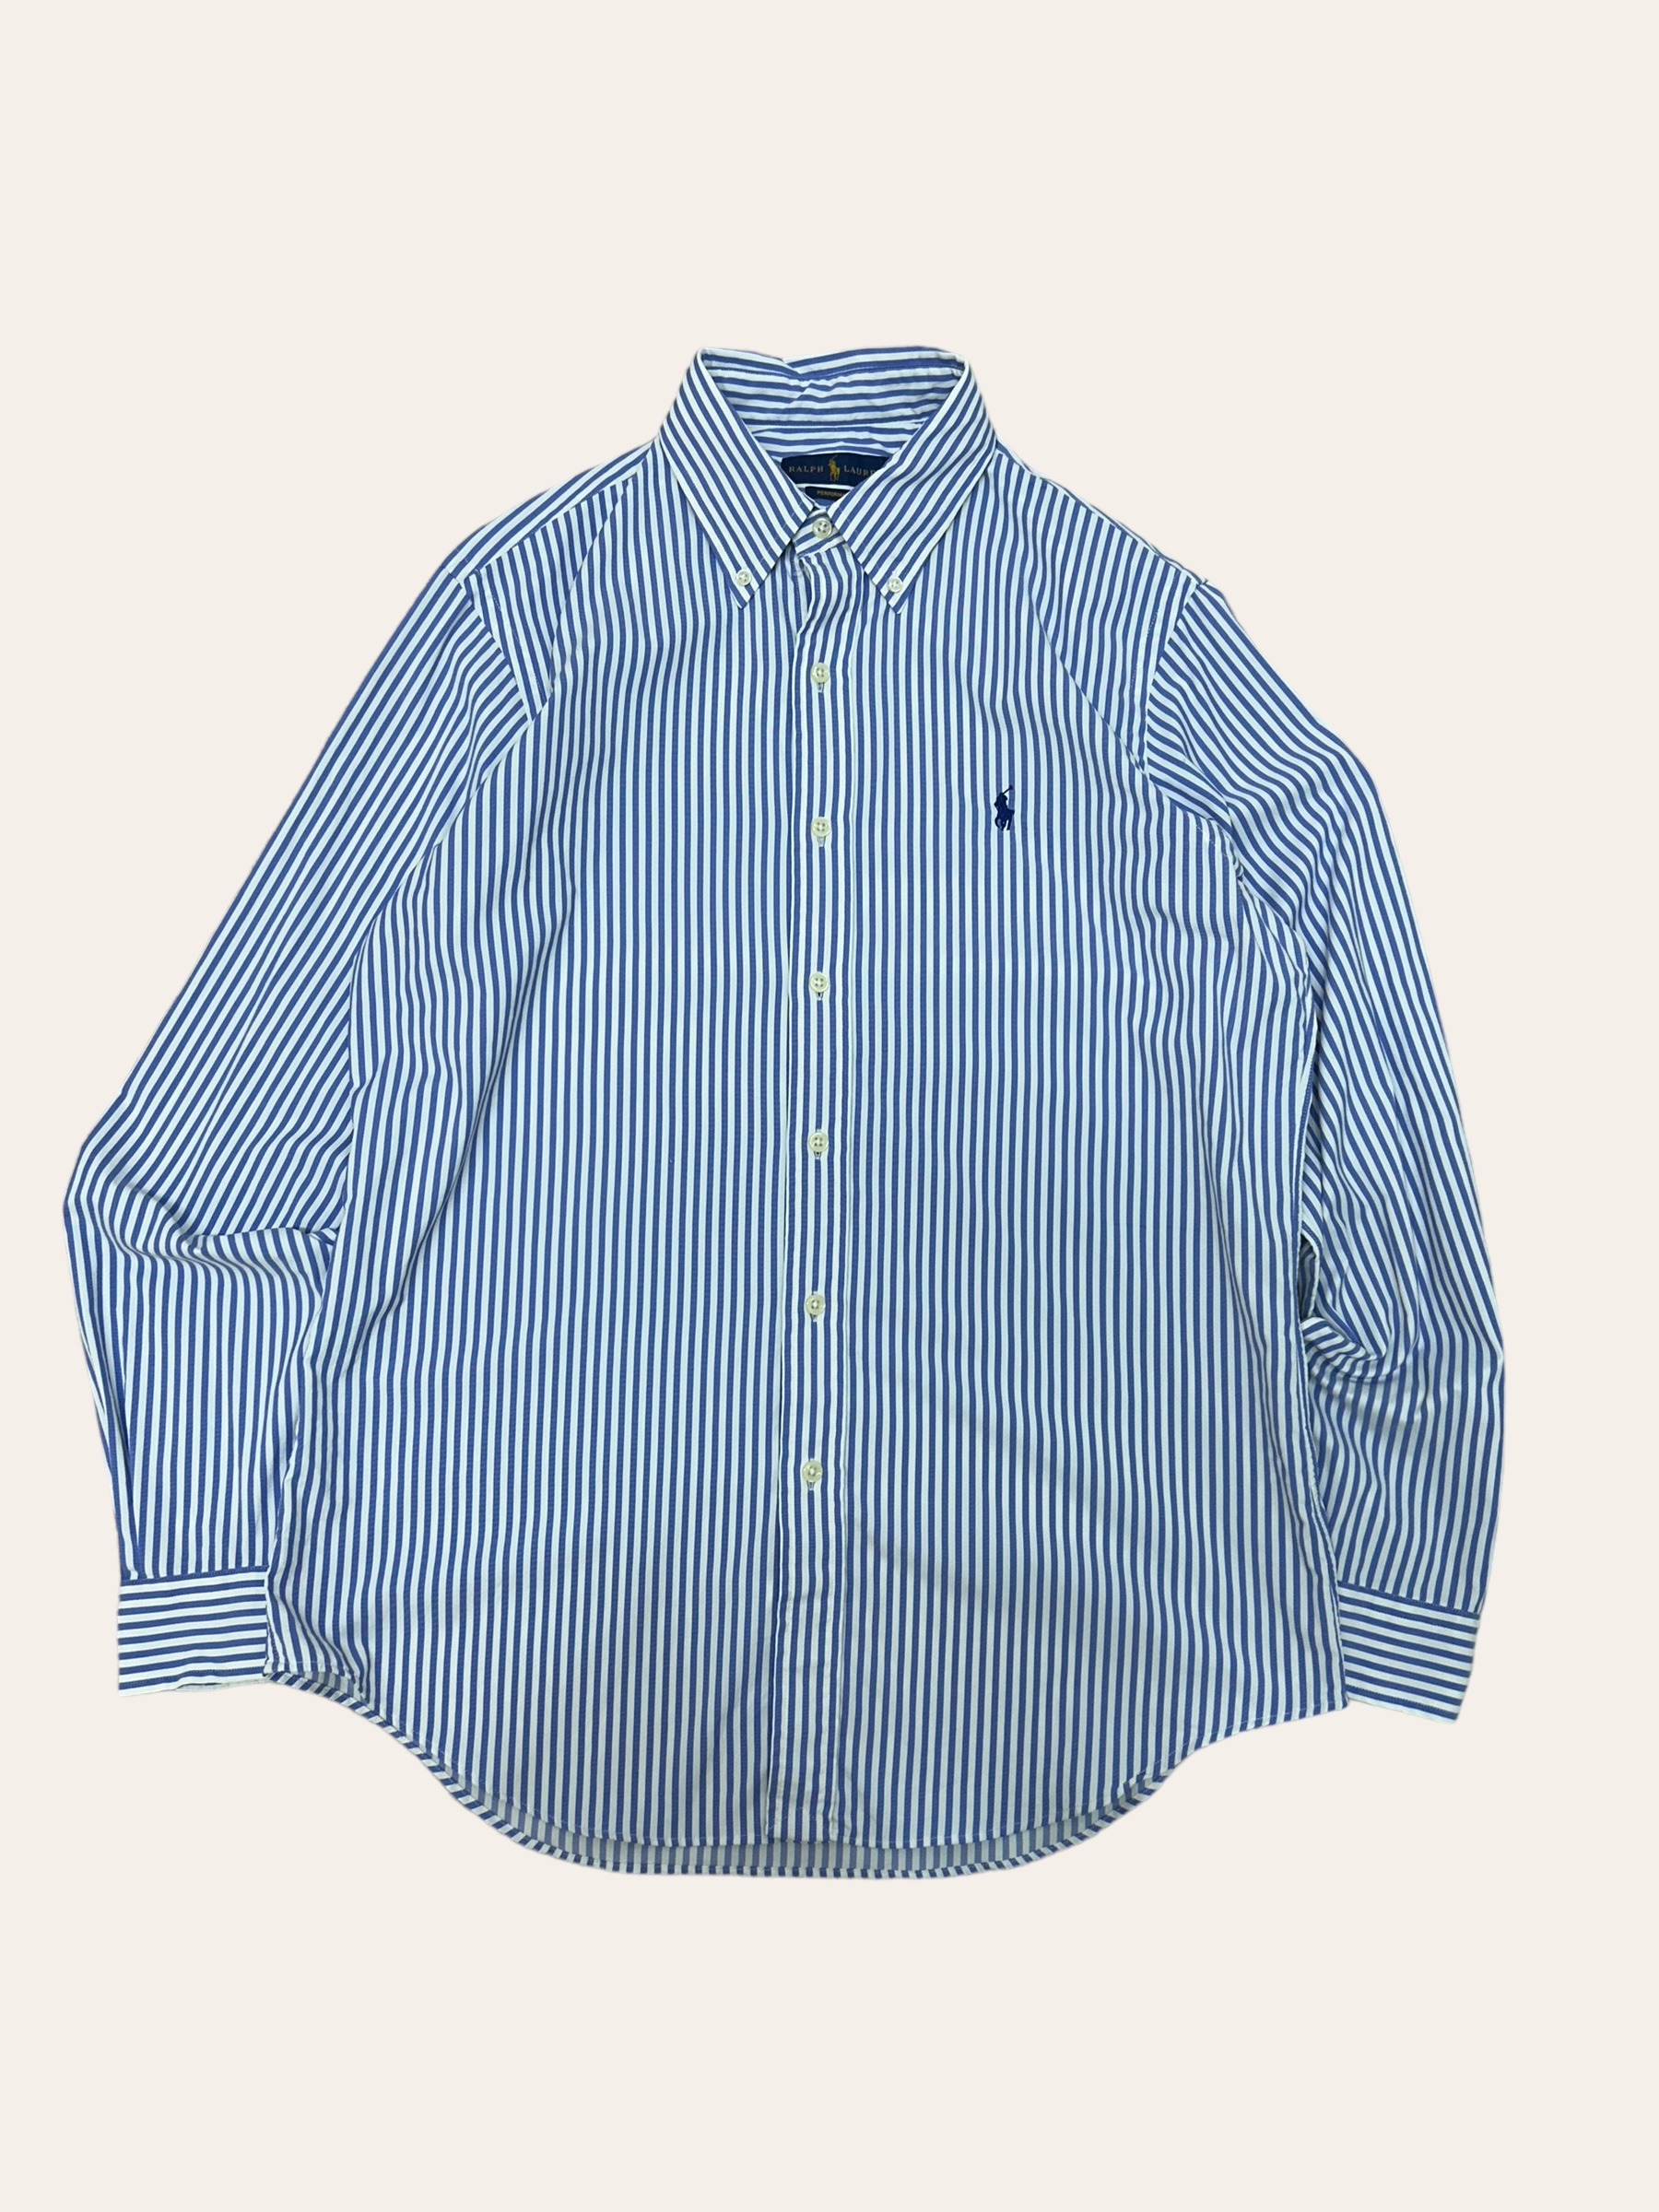 (From USA)Polo ralph lauren blue stripe performance shirt M